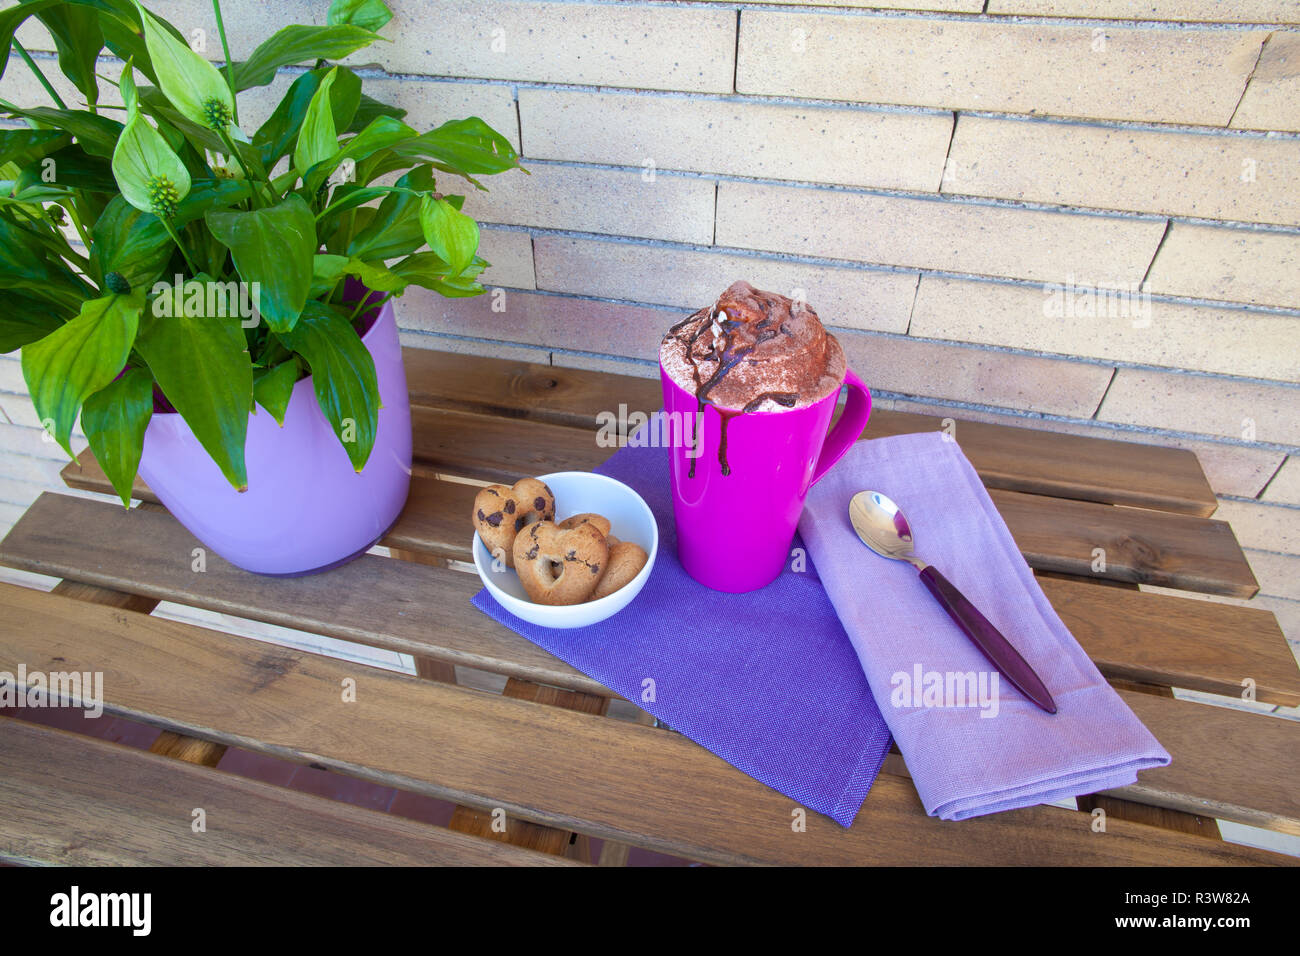 Cookies and Cappuccino outdoor - Italian breakfast in purple Stock Photo